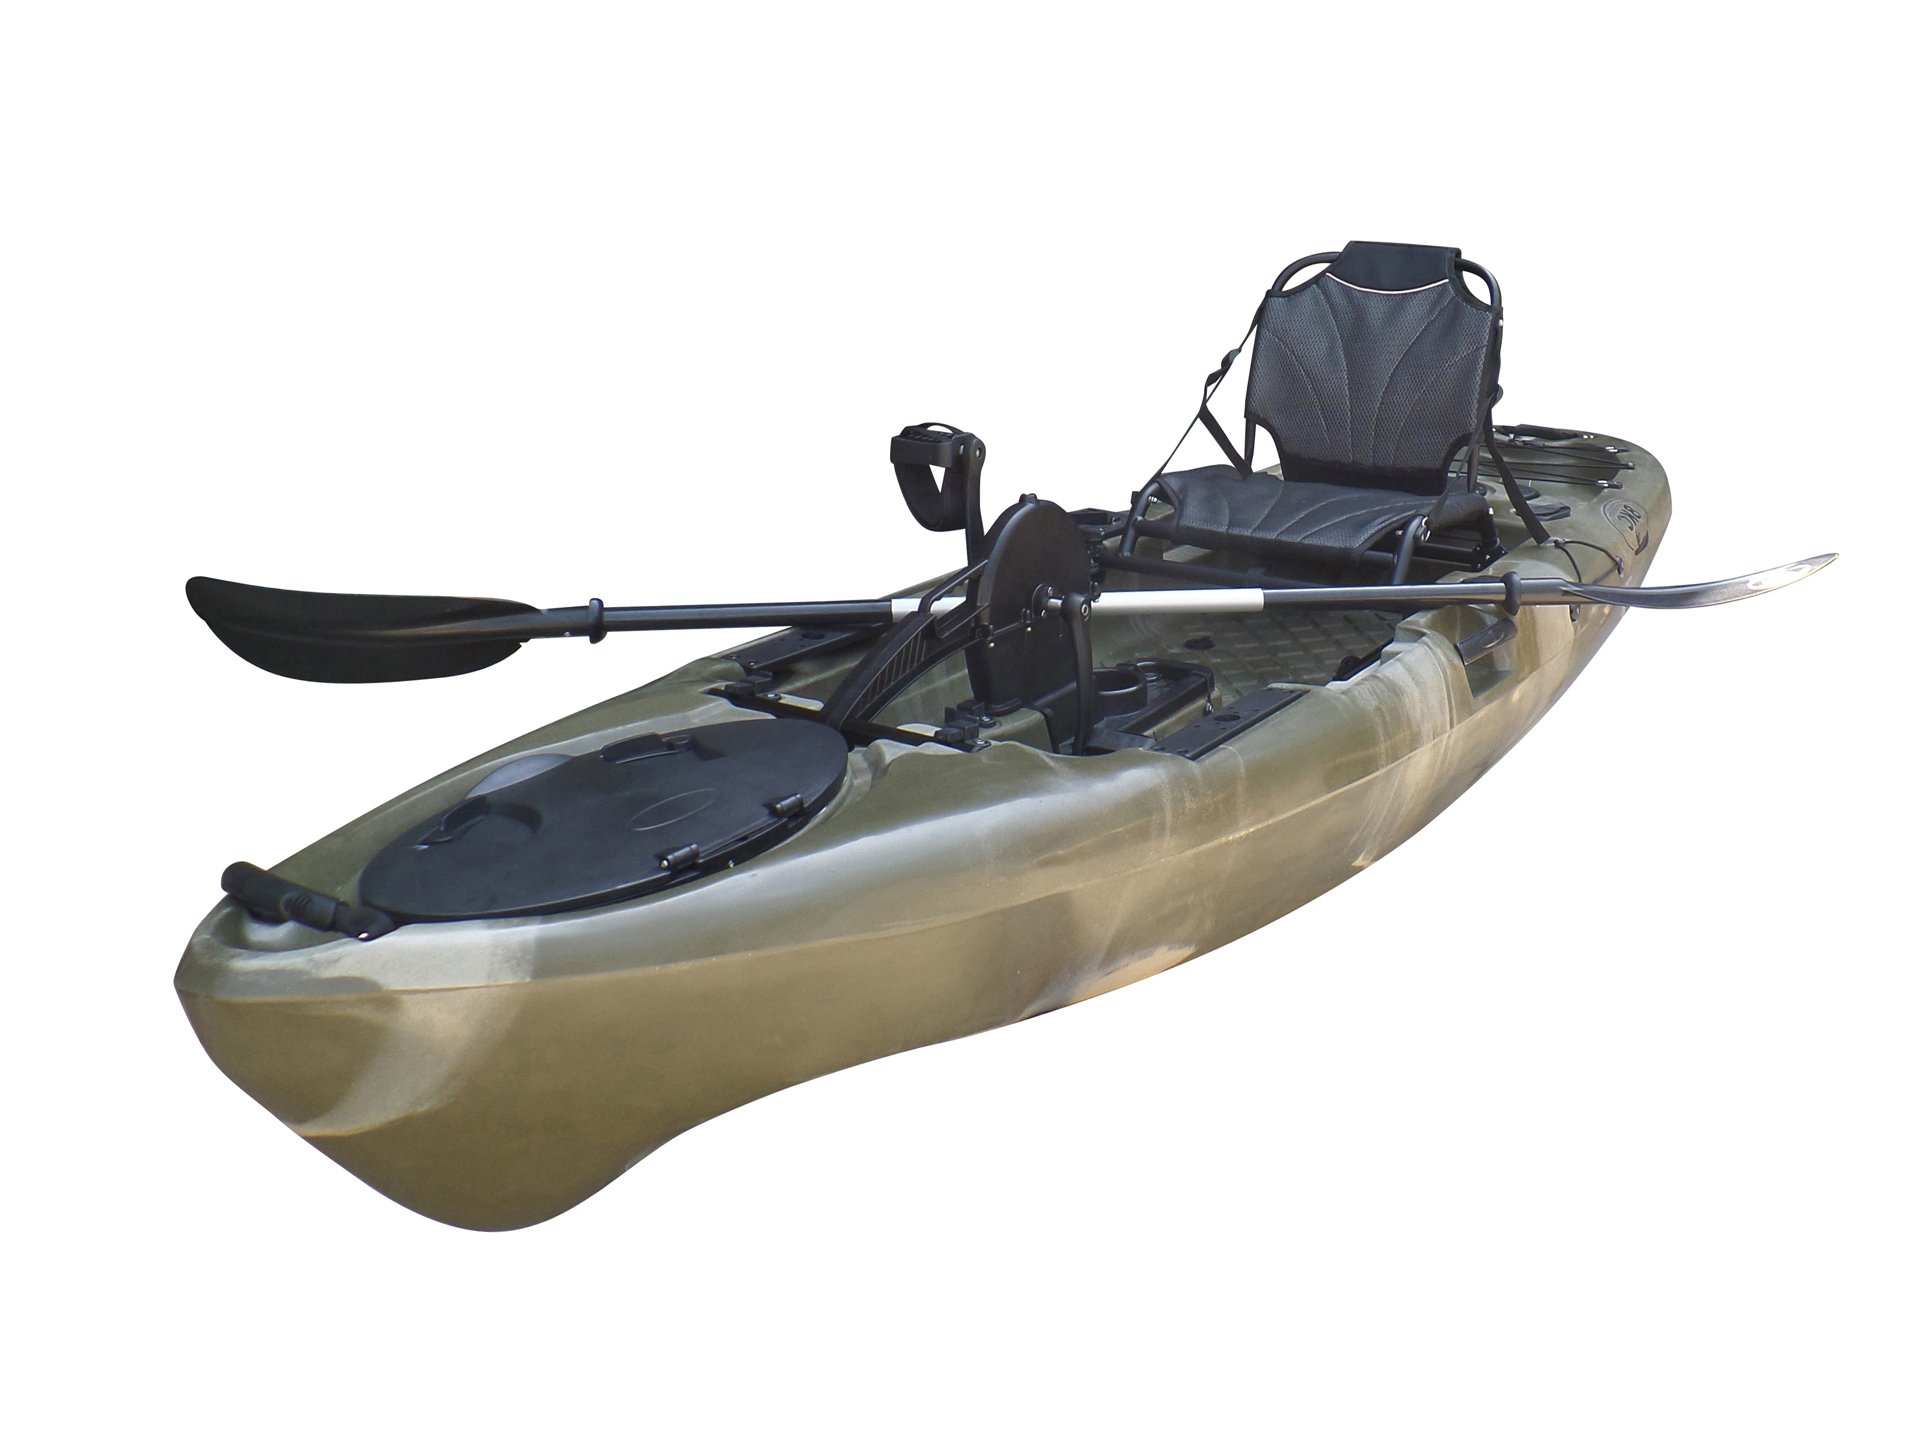 BKC - PK11 Angler 10.5-foot Sit On Top Solo Fishing Kayak w